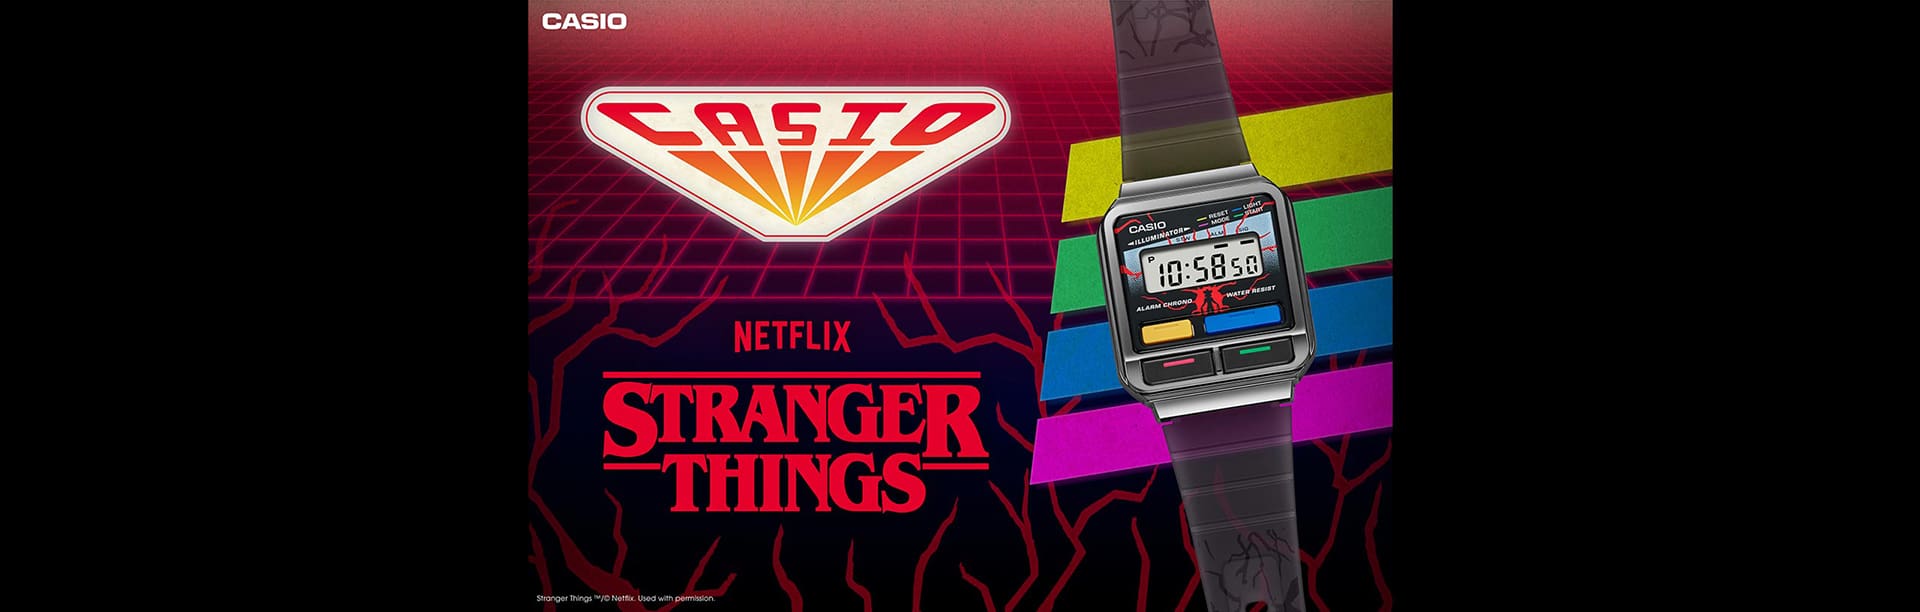 Casio x Netflix Stranger Things Collaboration model retro poster